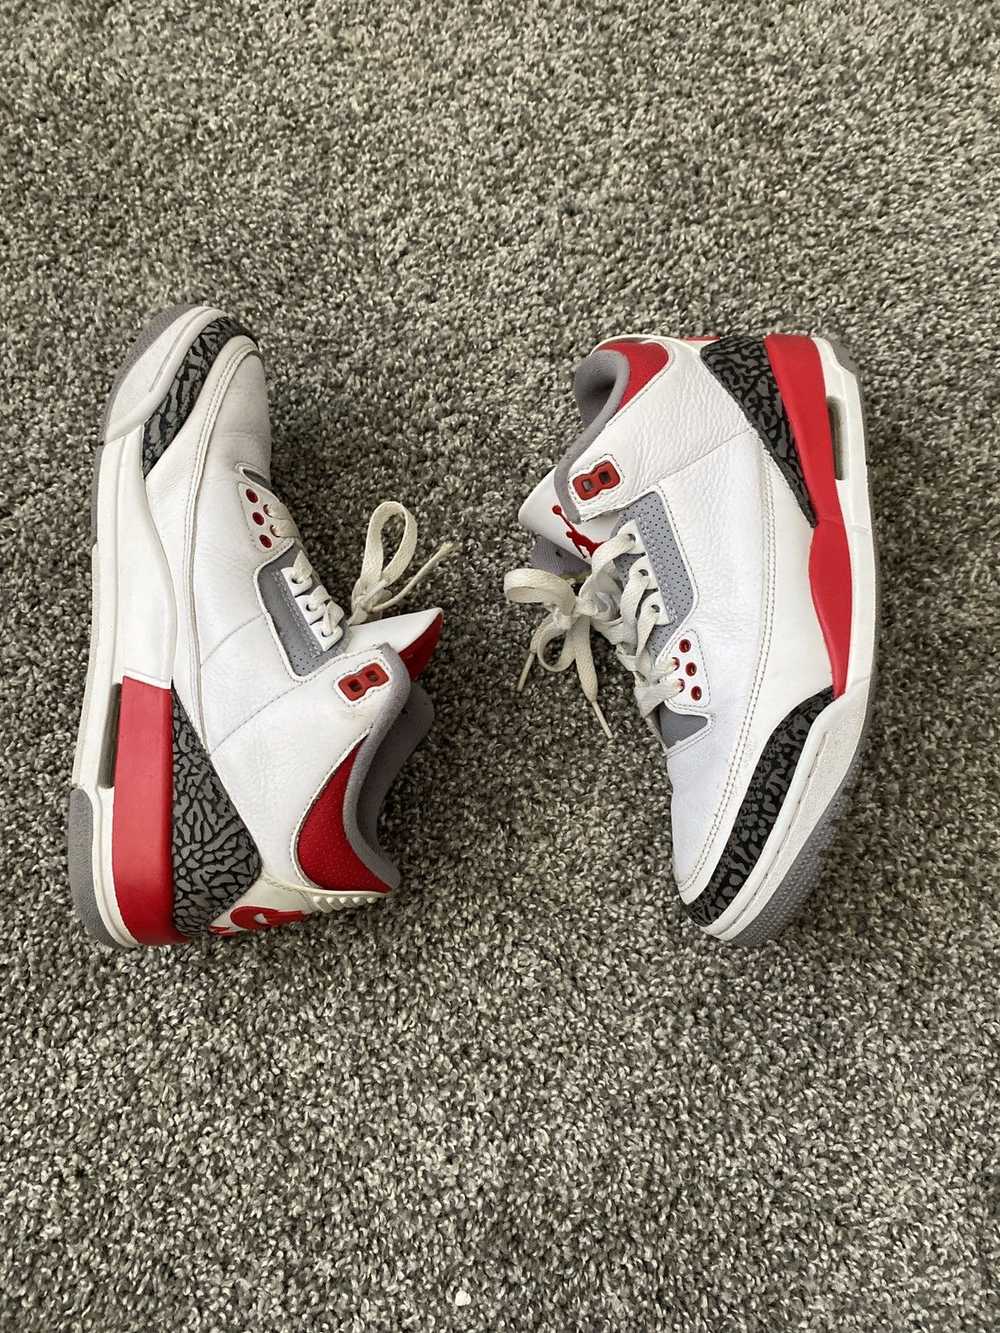 Jordan Brand Size 8 - Jordan 3 Retro Mid Fire Red - image 2